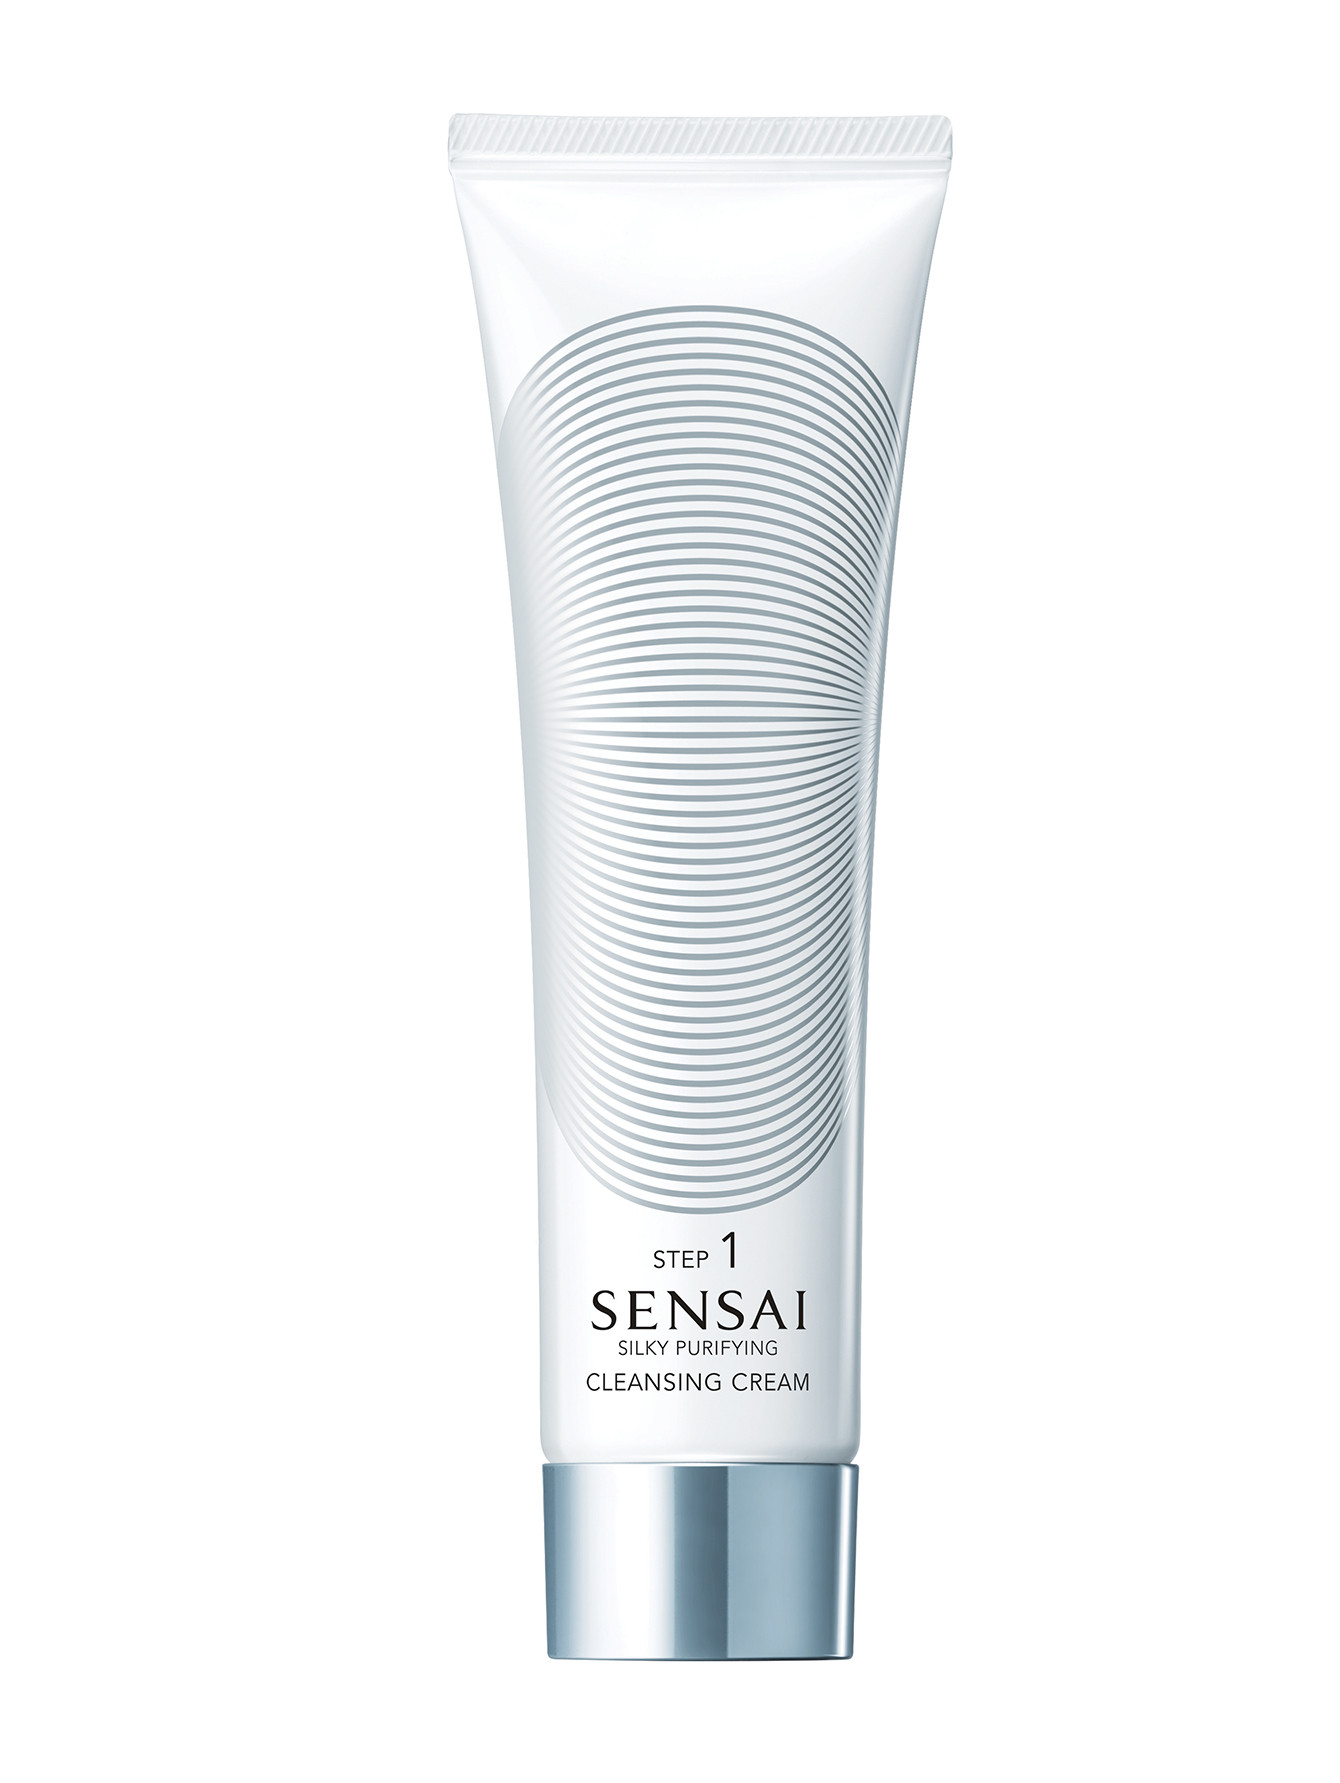 Очищающий крем для лица - Sensai Silky Purifying, 125ml - Общий вид